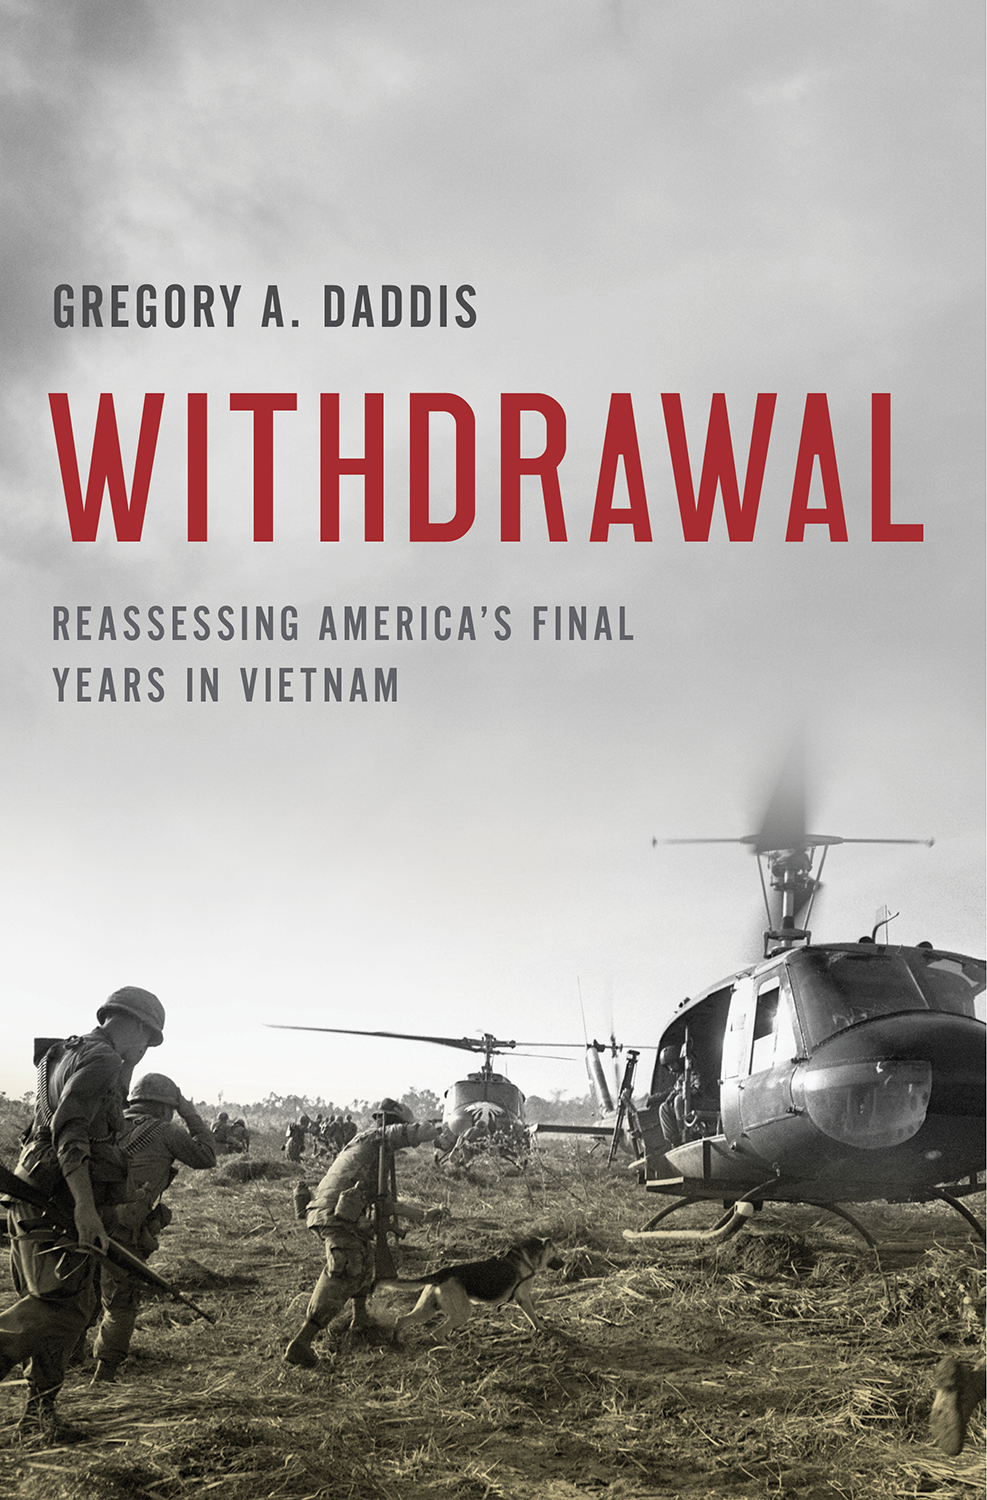 Reassessing the Vietnam War | Chapman Newsroom